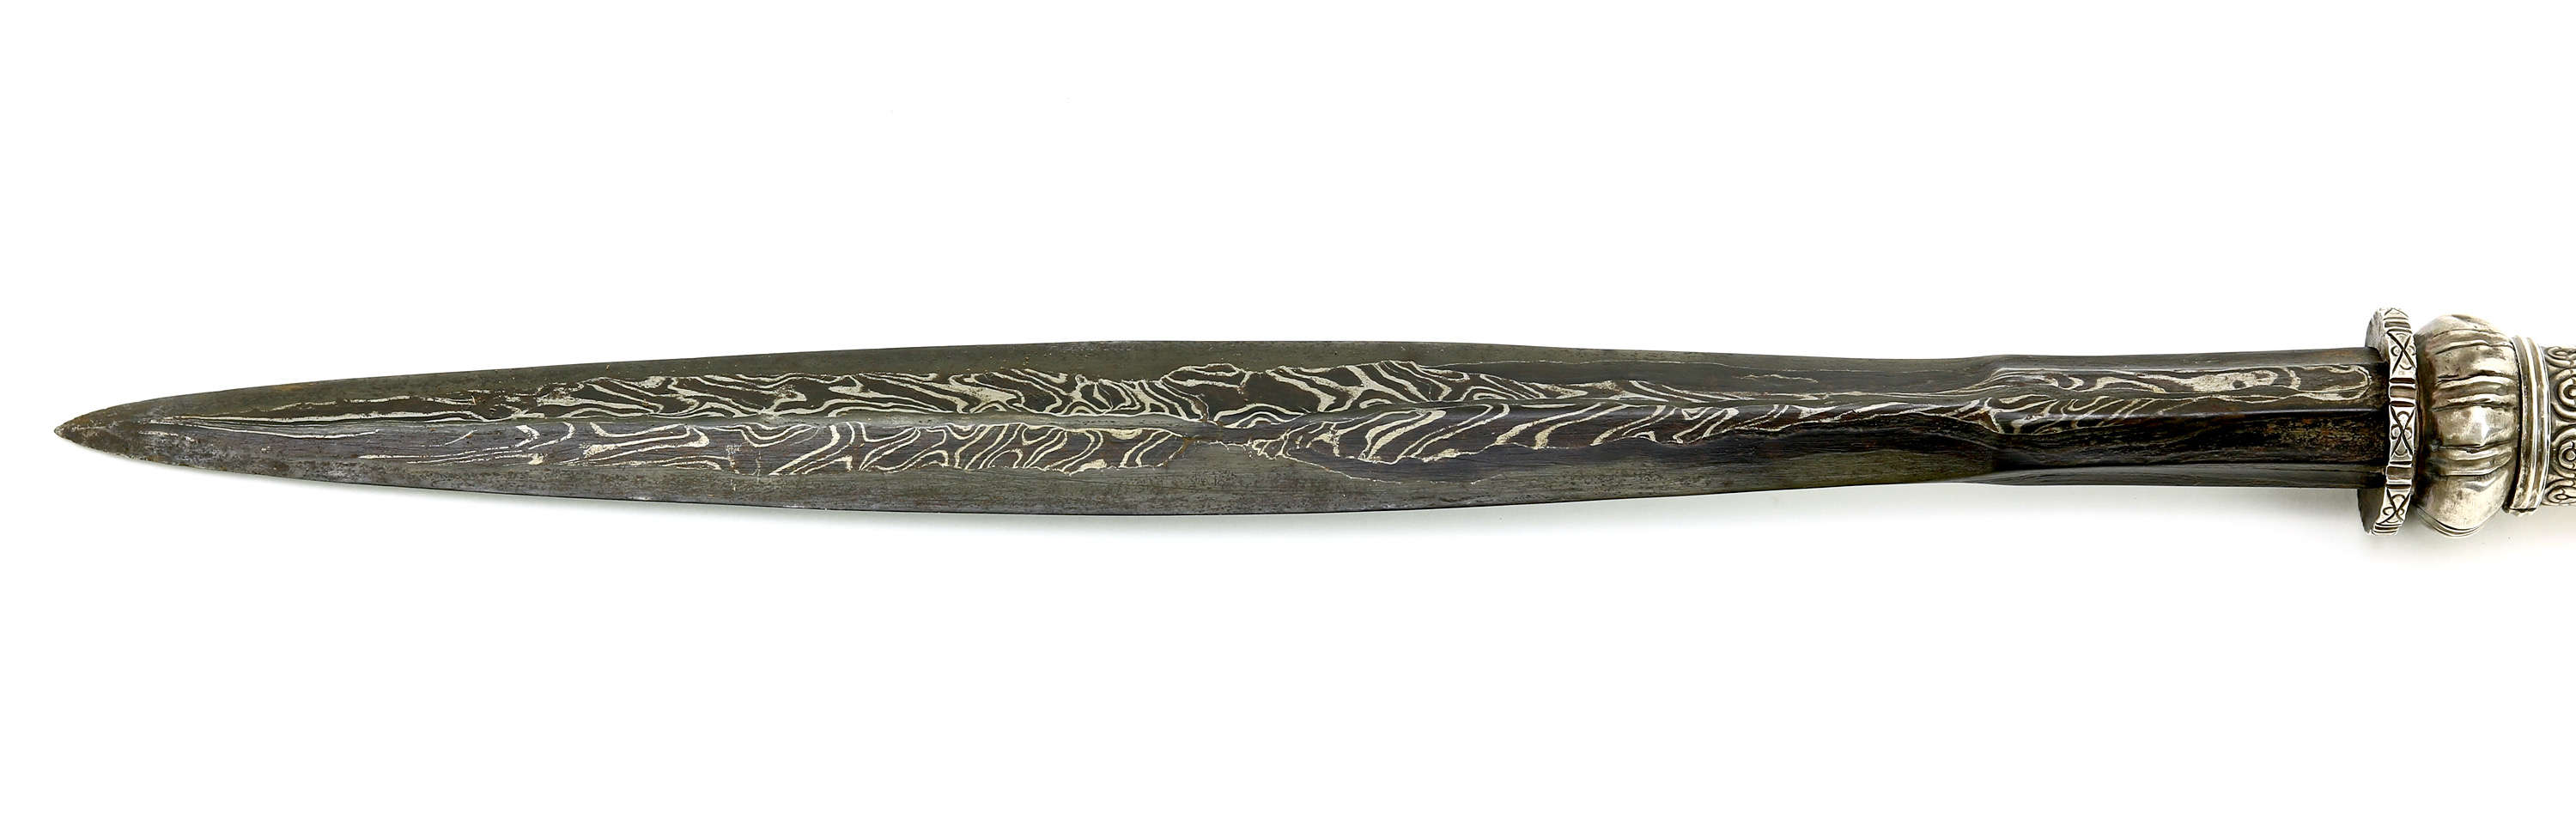 Bali tombak with twist-core blade